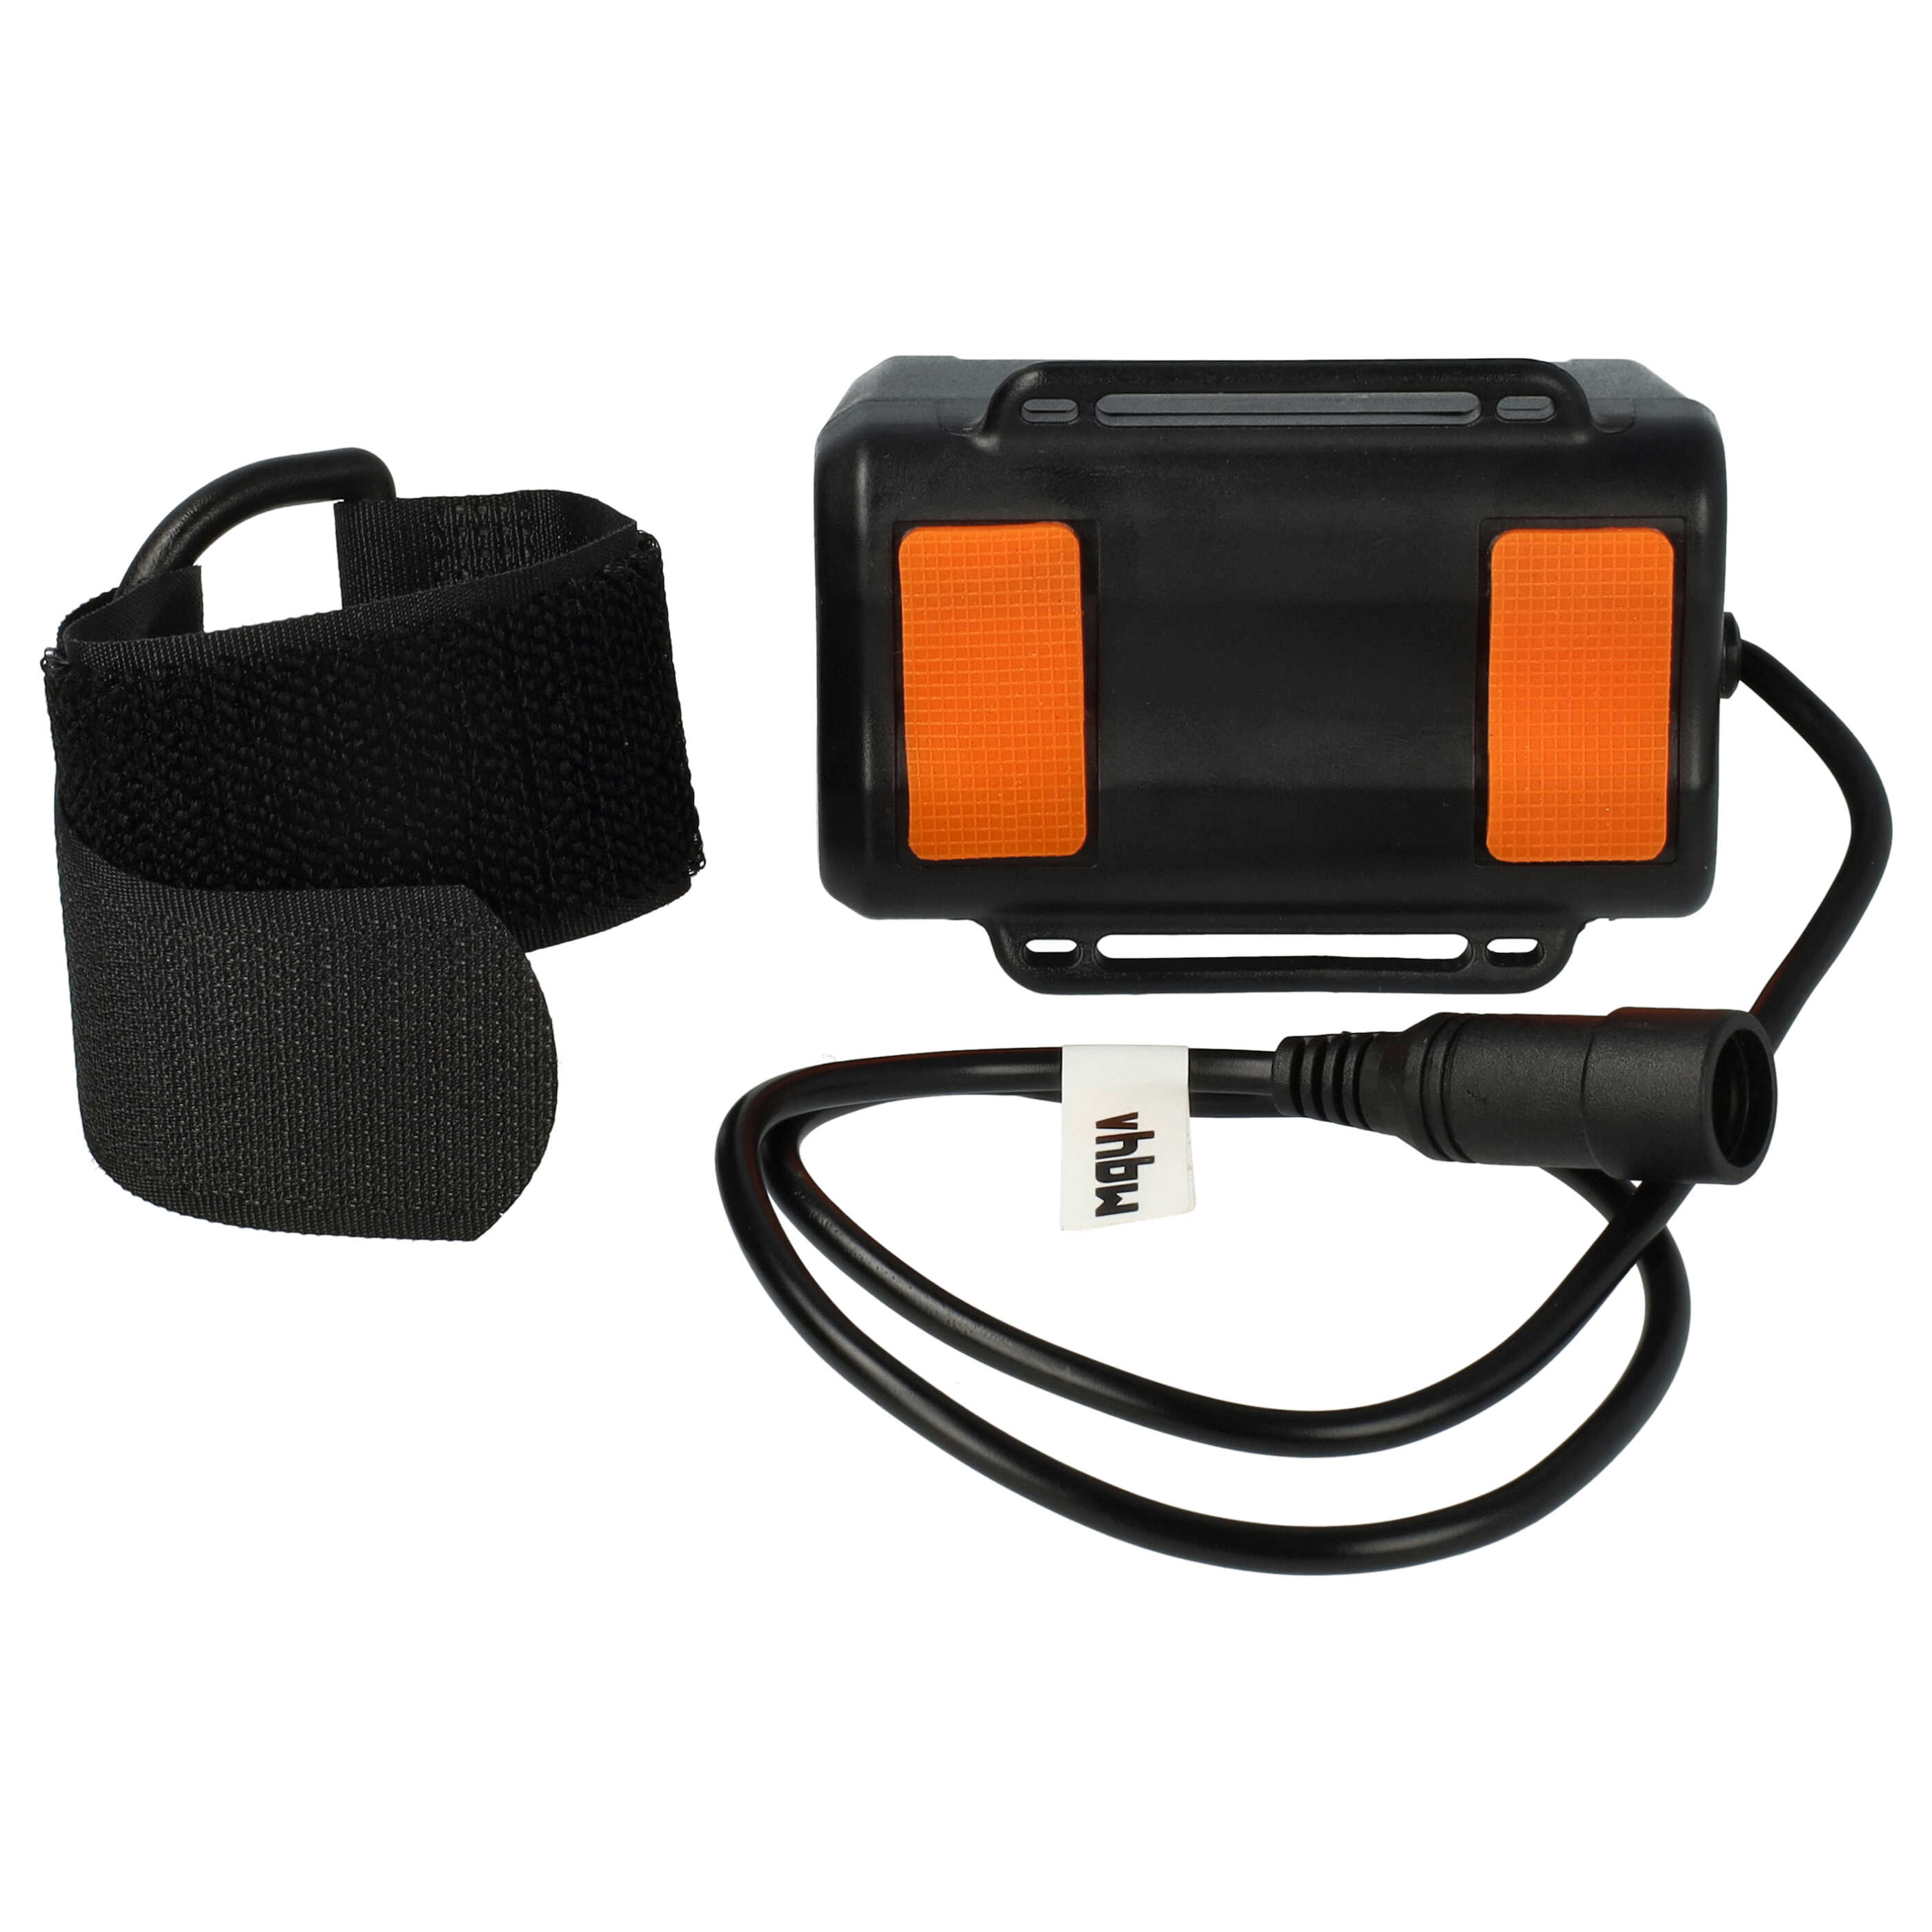 Li-Ion-battery pack- 6000mAh 8.4V waterproof - for bicycle lamp light